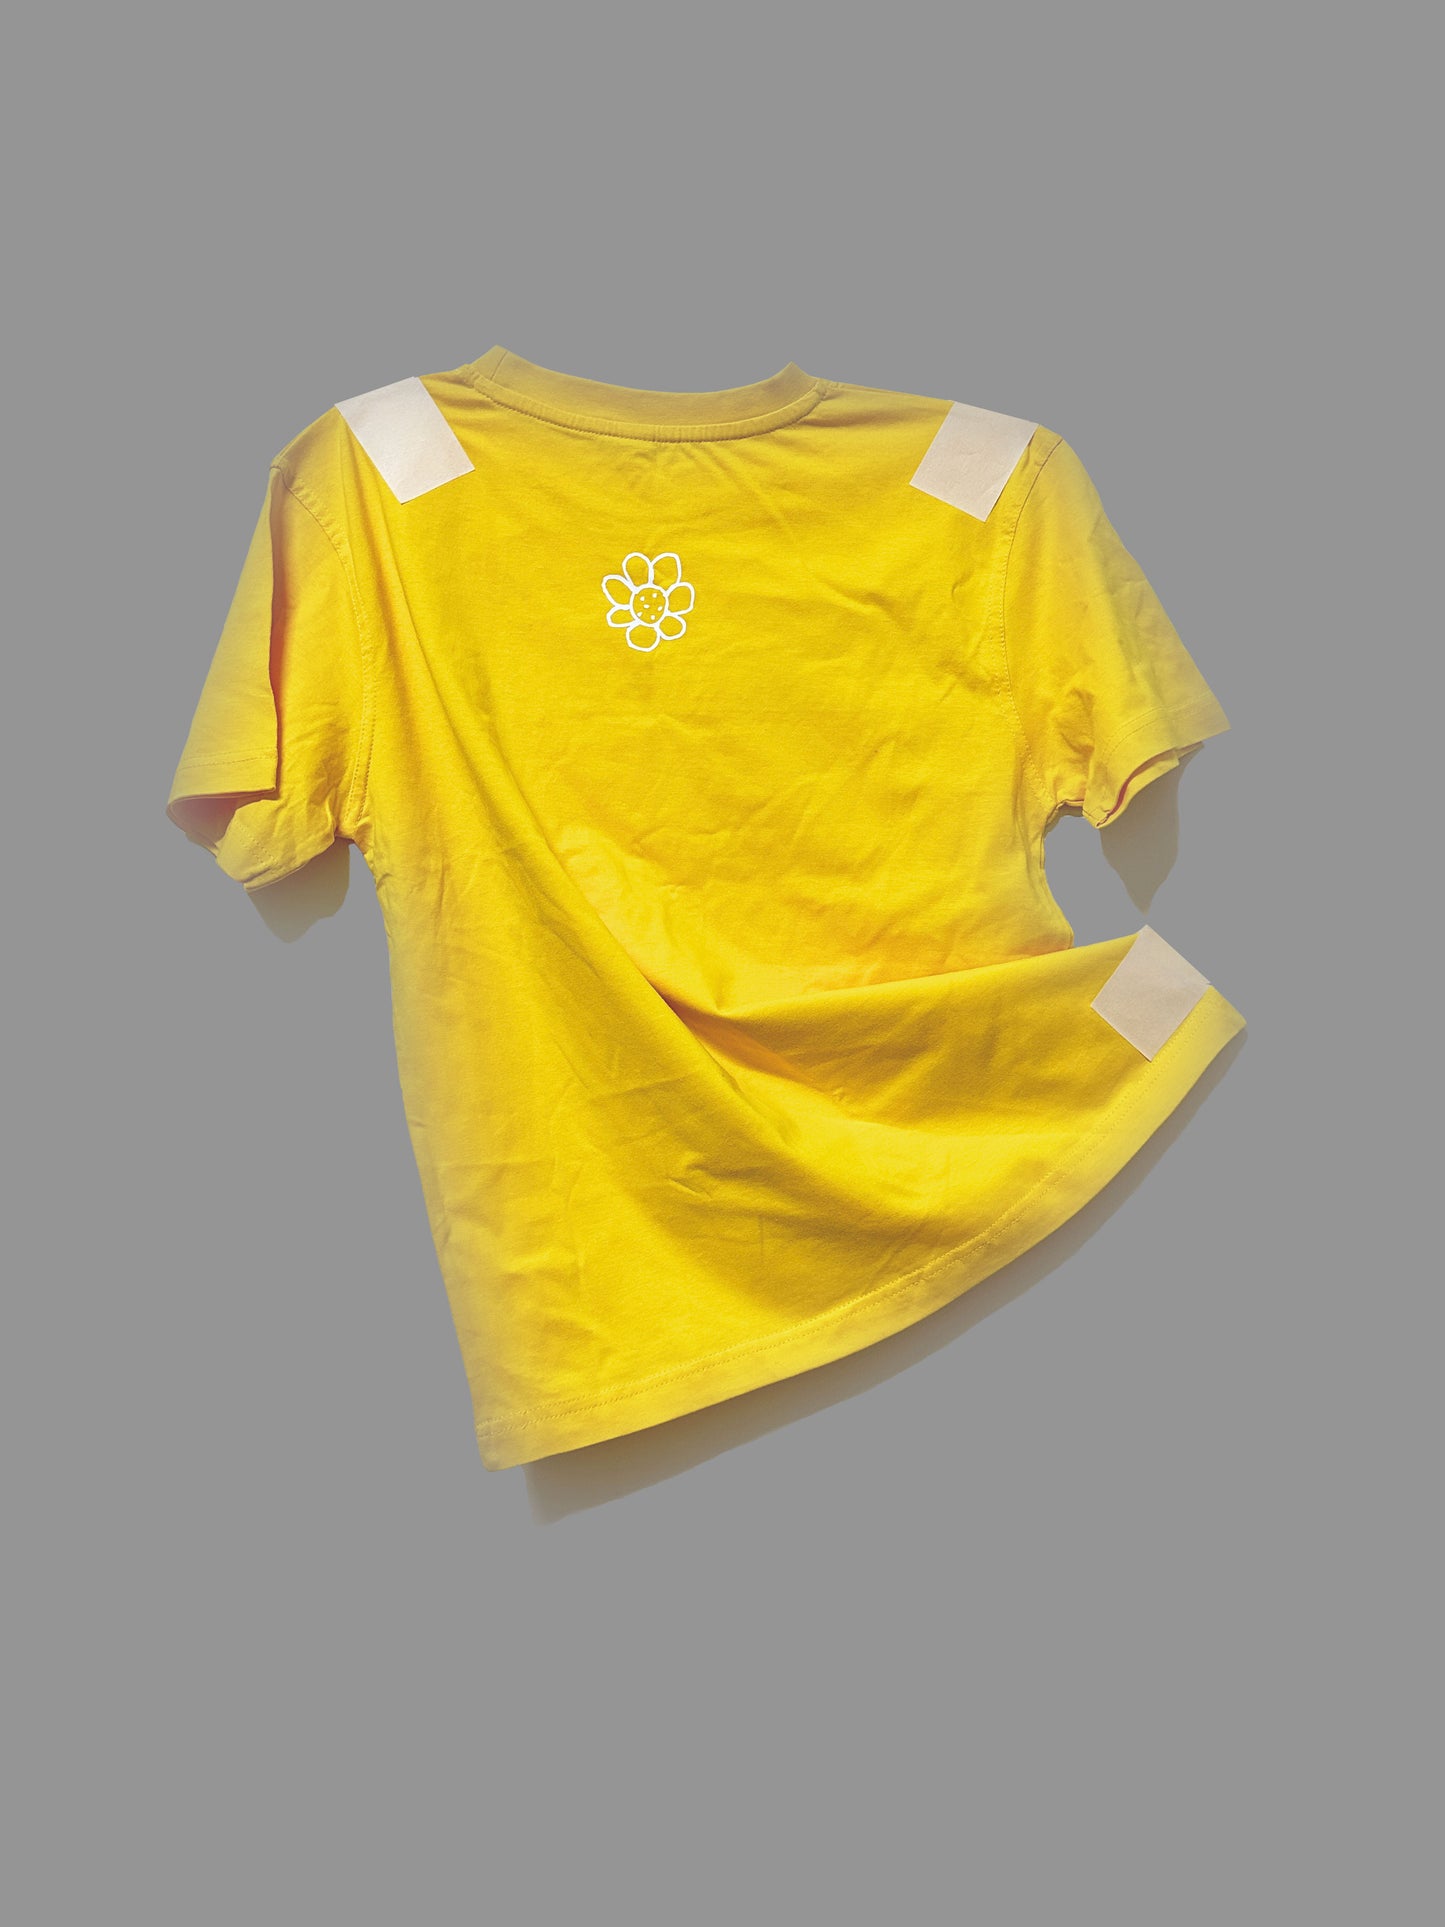 nmp.t-shirt — meyer lemon